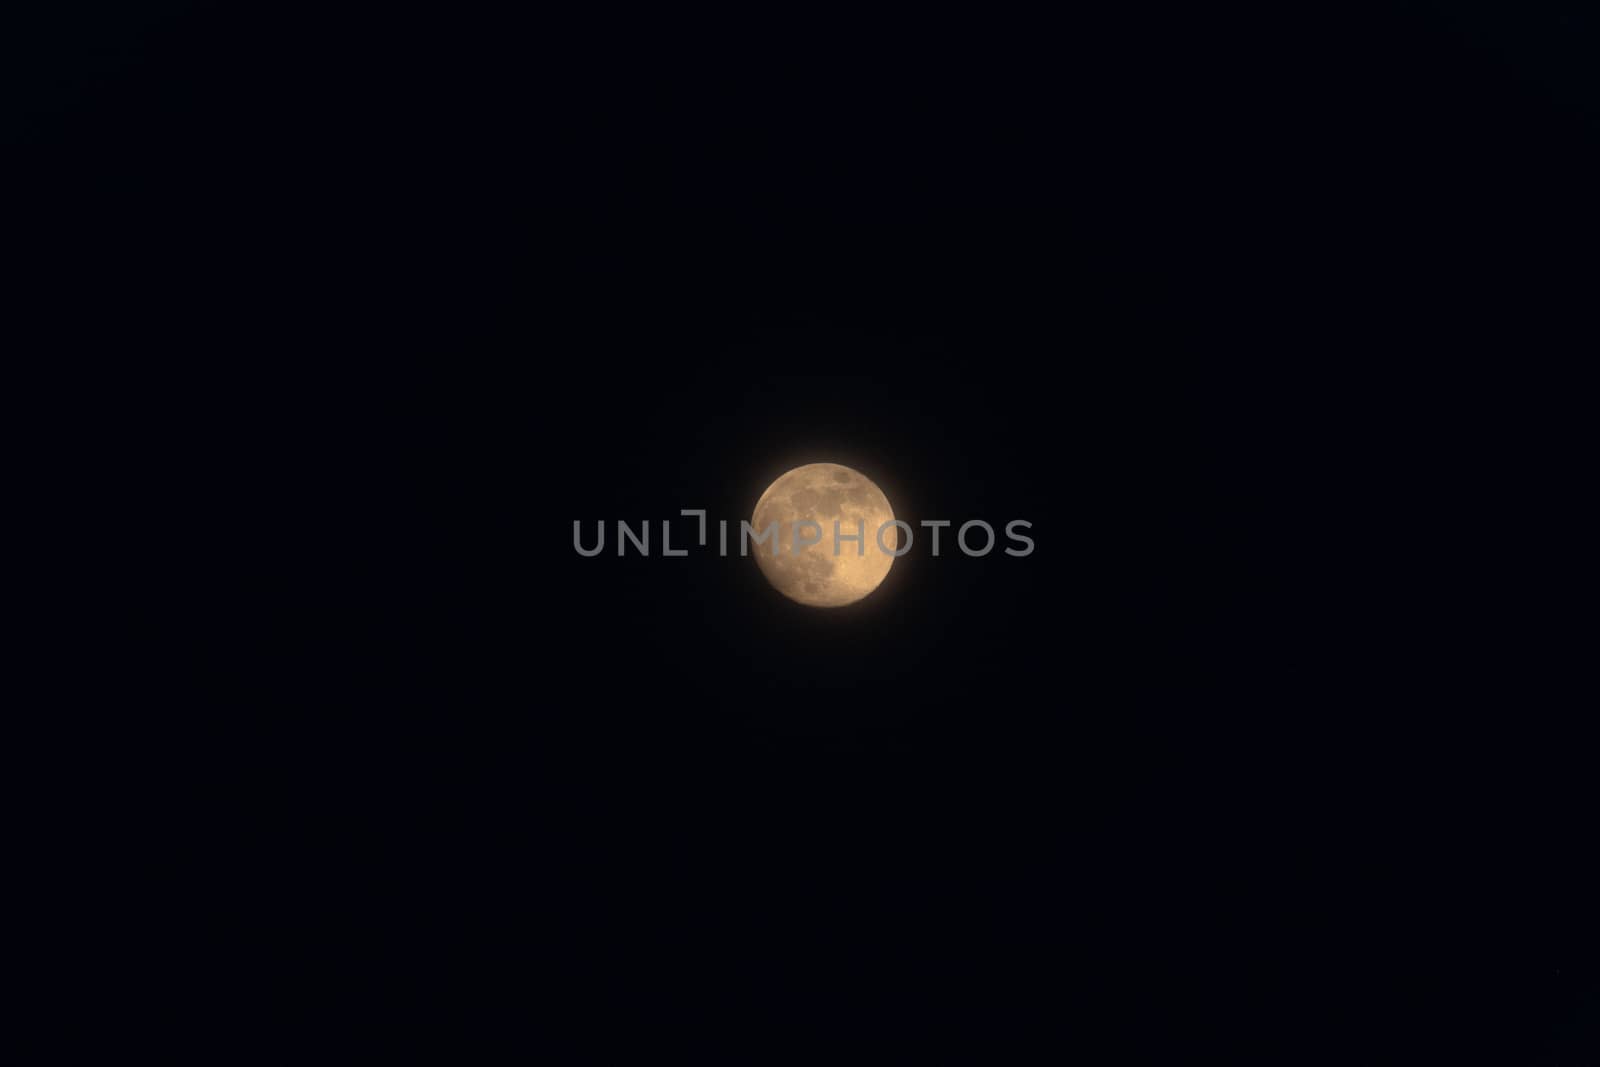 Full moon isolated on a black sky